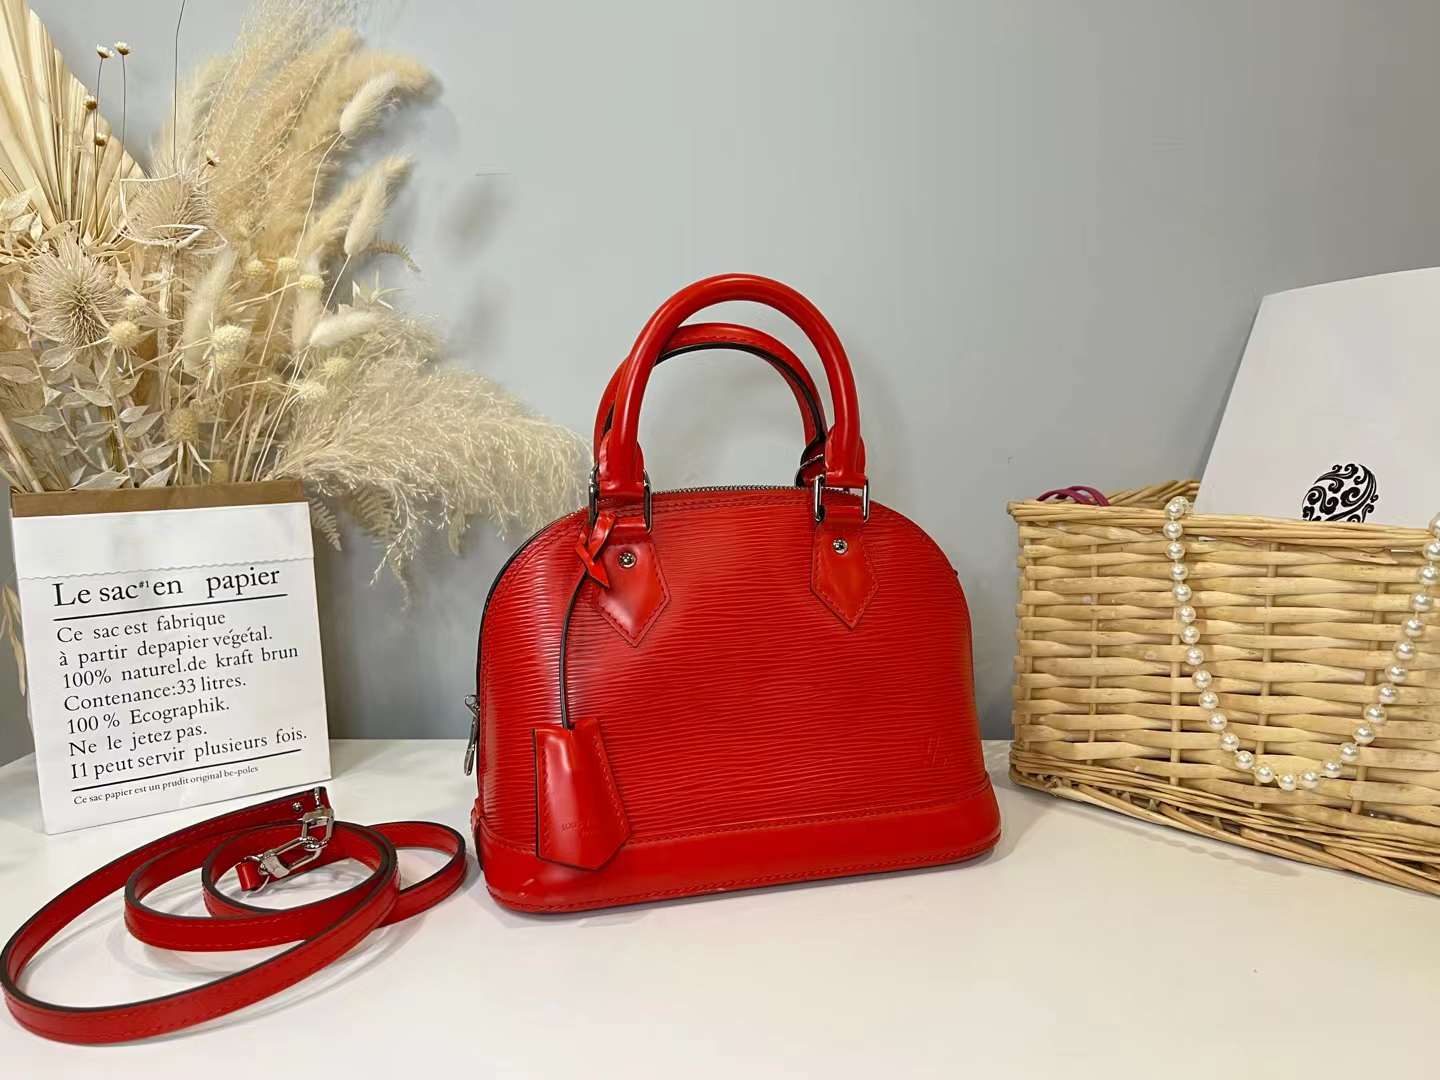 Louis Vuitton Alma small model handbag in red epi leather